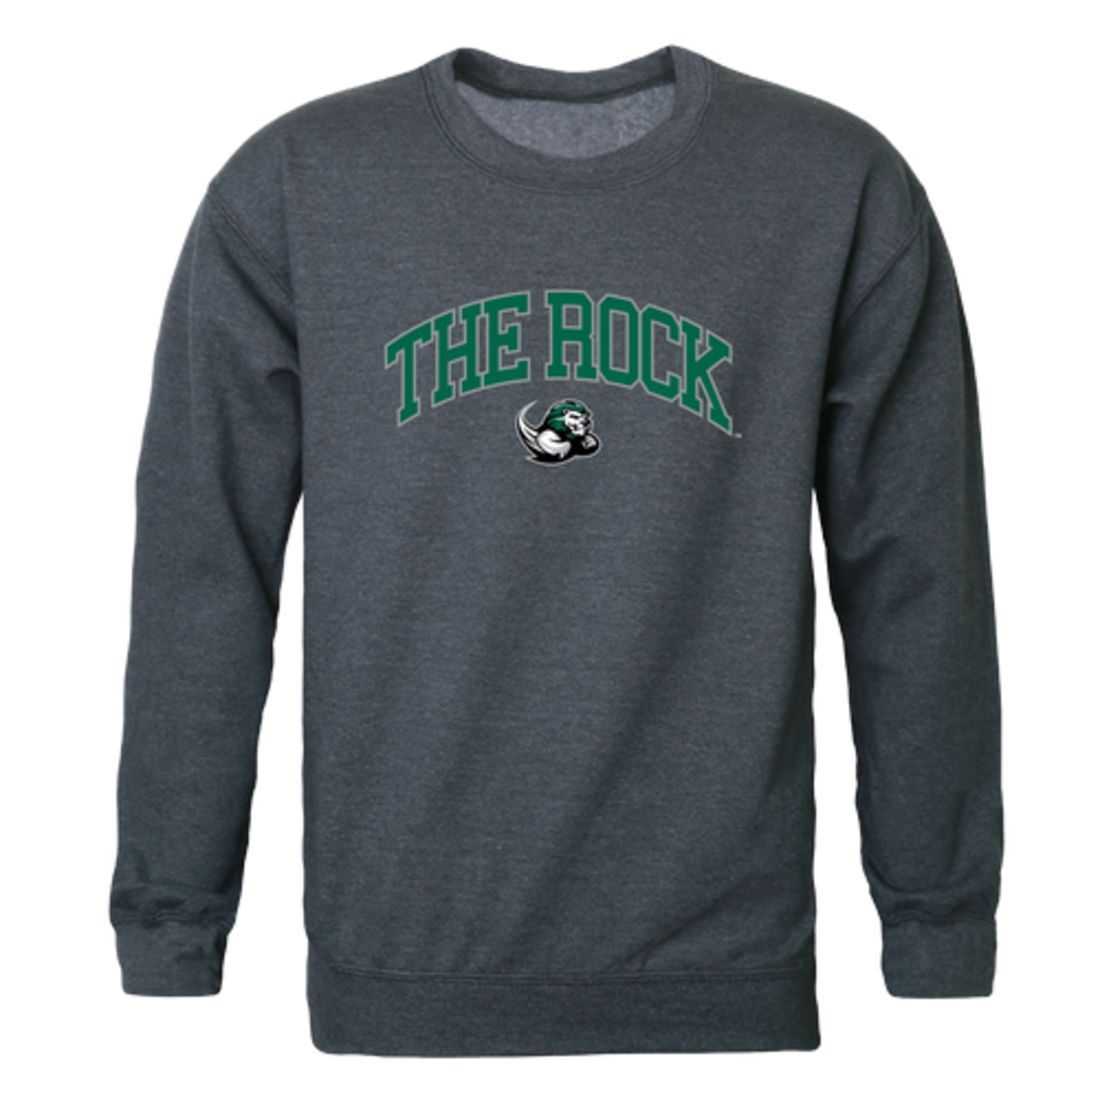 Slippery Rock The Rock Campus Crewneck Sweatshirt